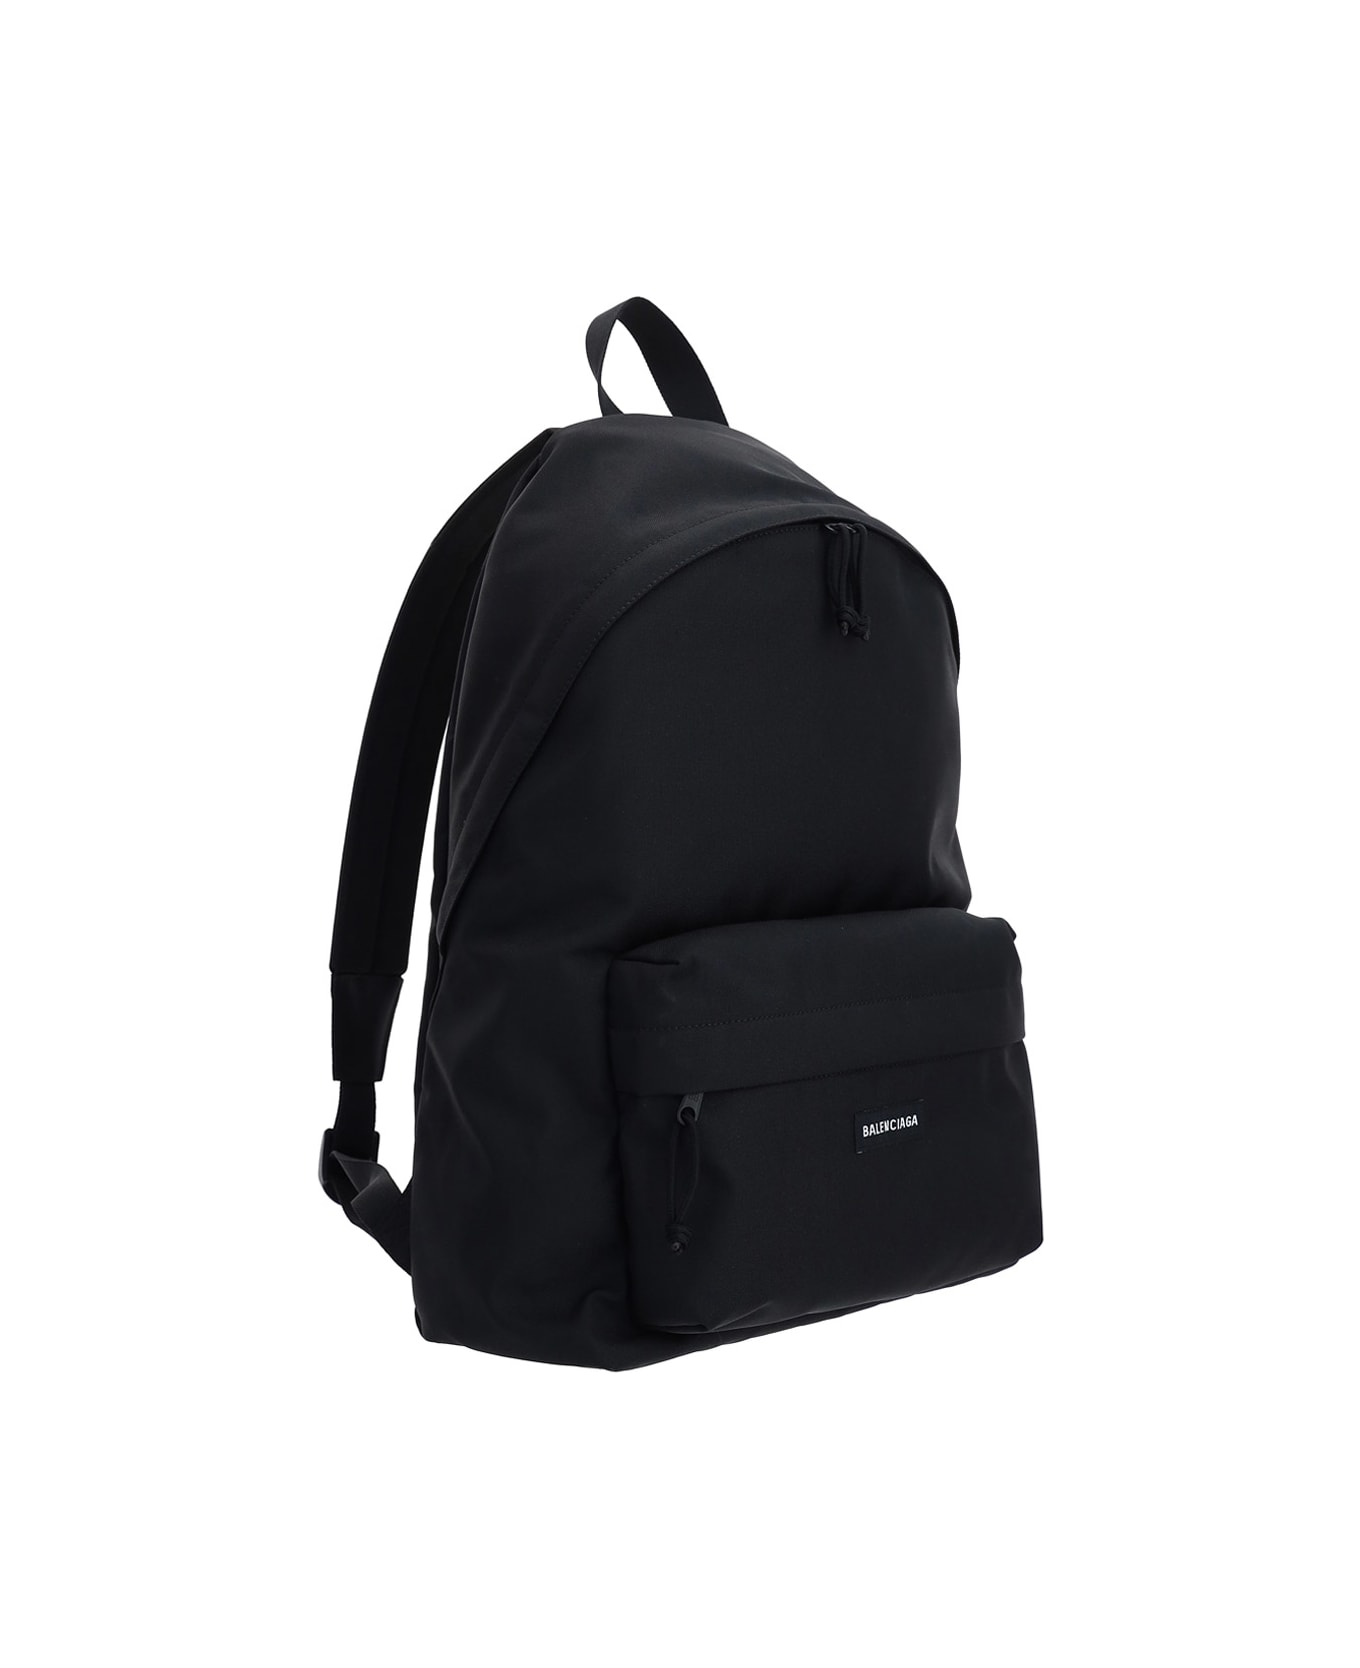 Balenciaga Backpack - Nero